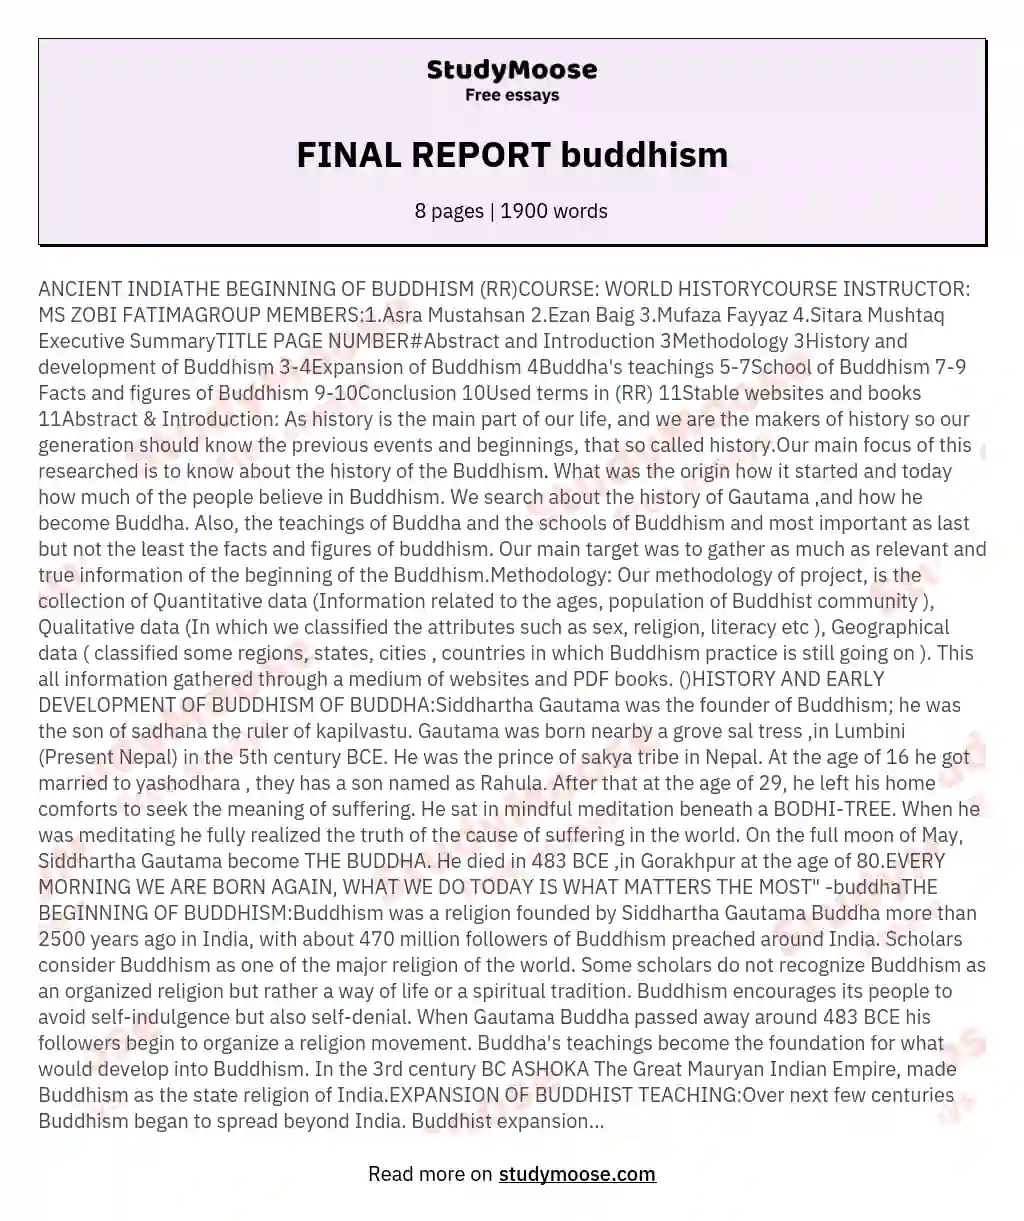 FINAL REPORT buddhism essay